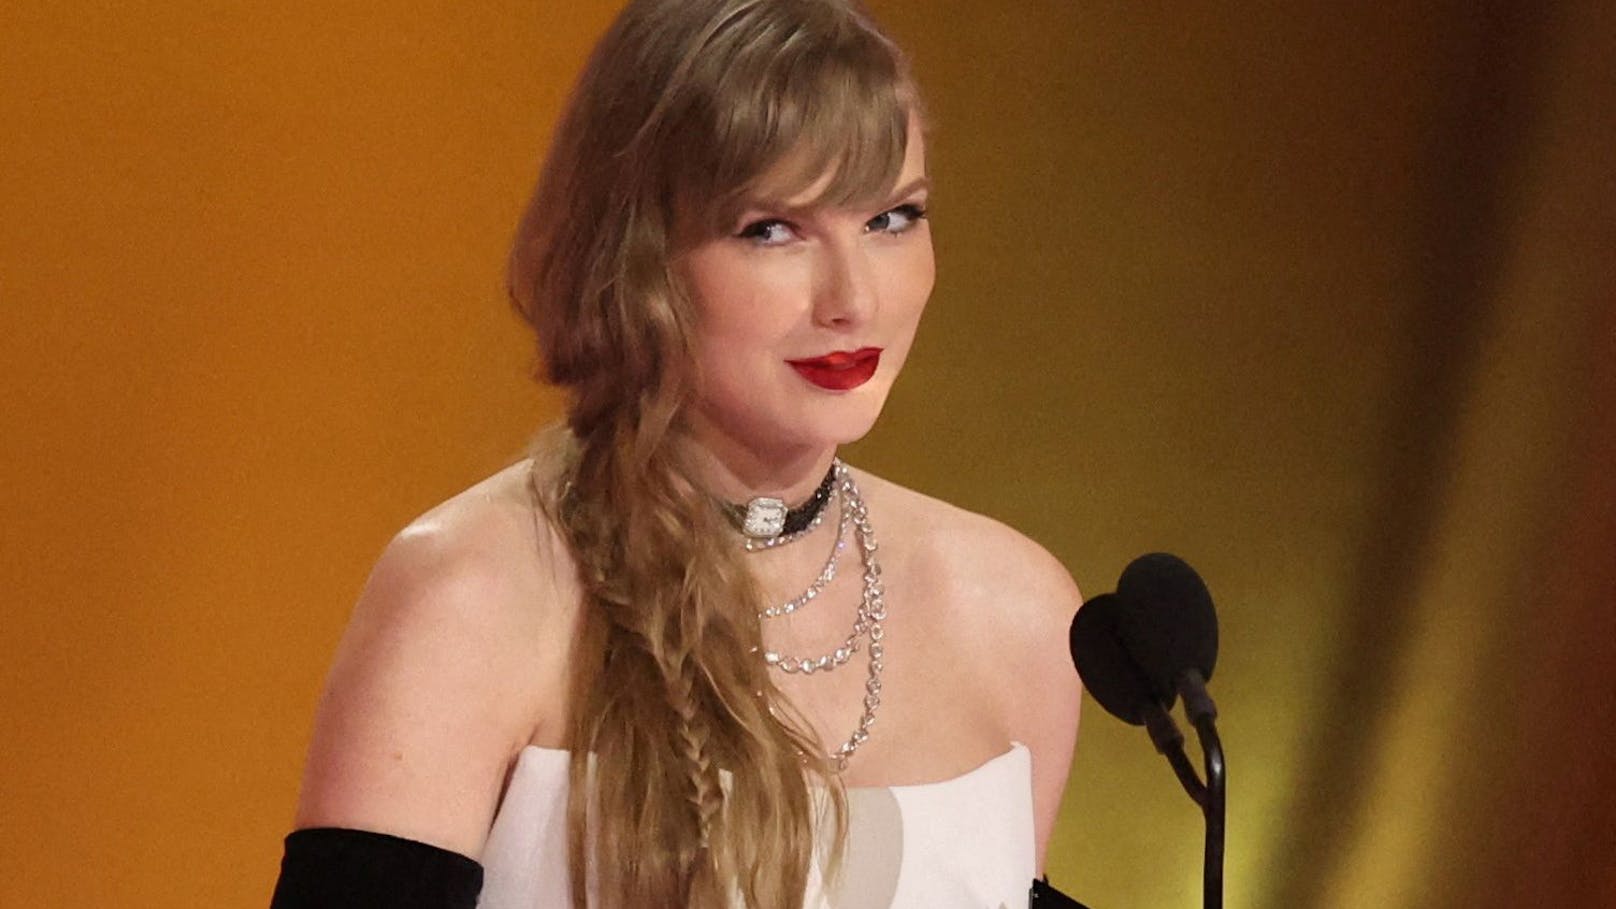 "Nicht okay": Taylor Swift schimpft so viel wie nie